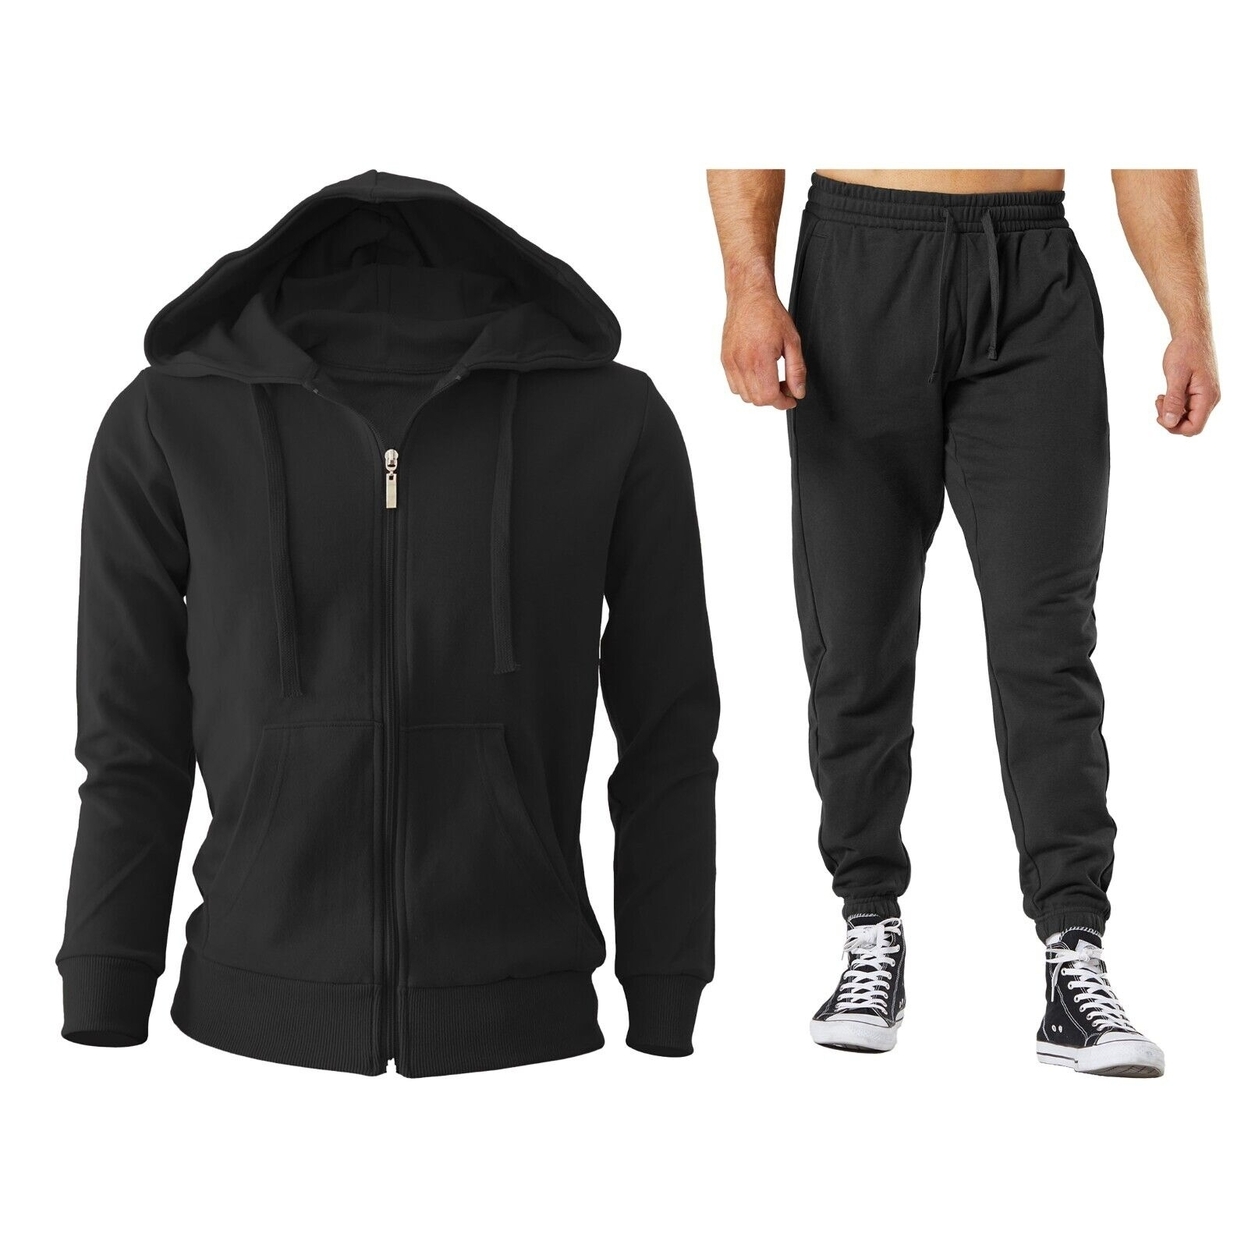 2-Piece: Men's Winter Warm Cozy Athletic Multi-Pockets BIG & TALL Sweatsuit Set - Black, X-large